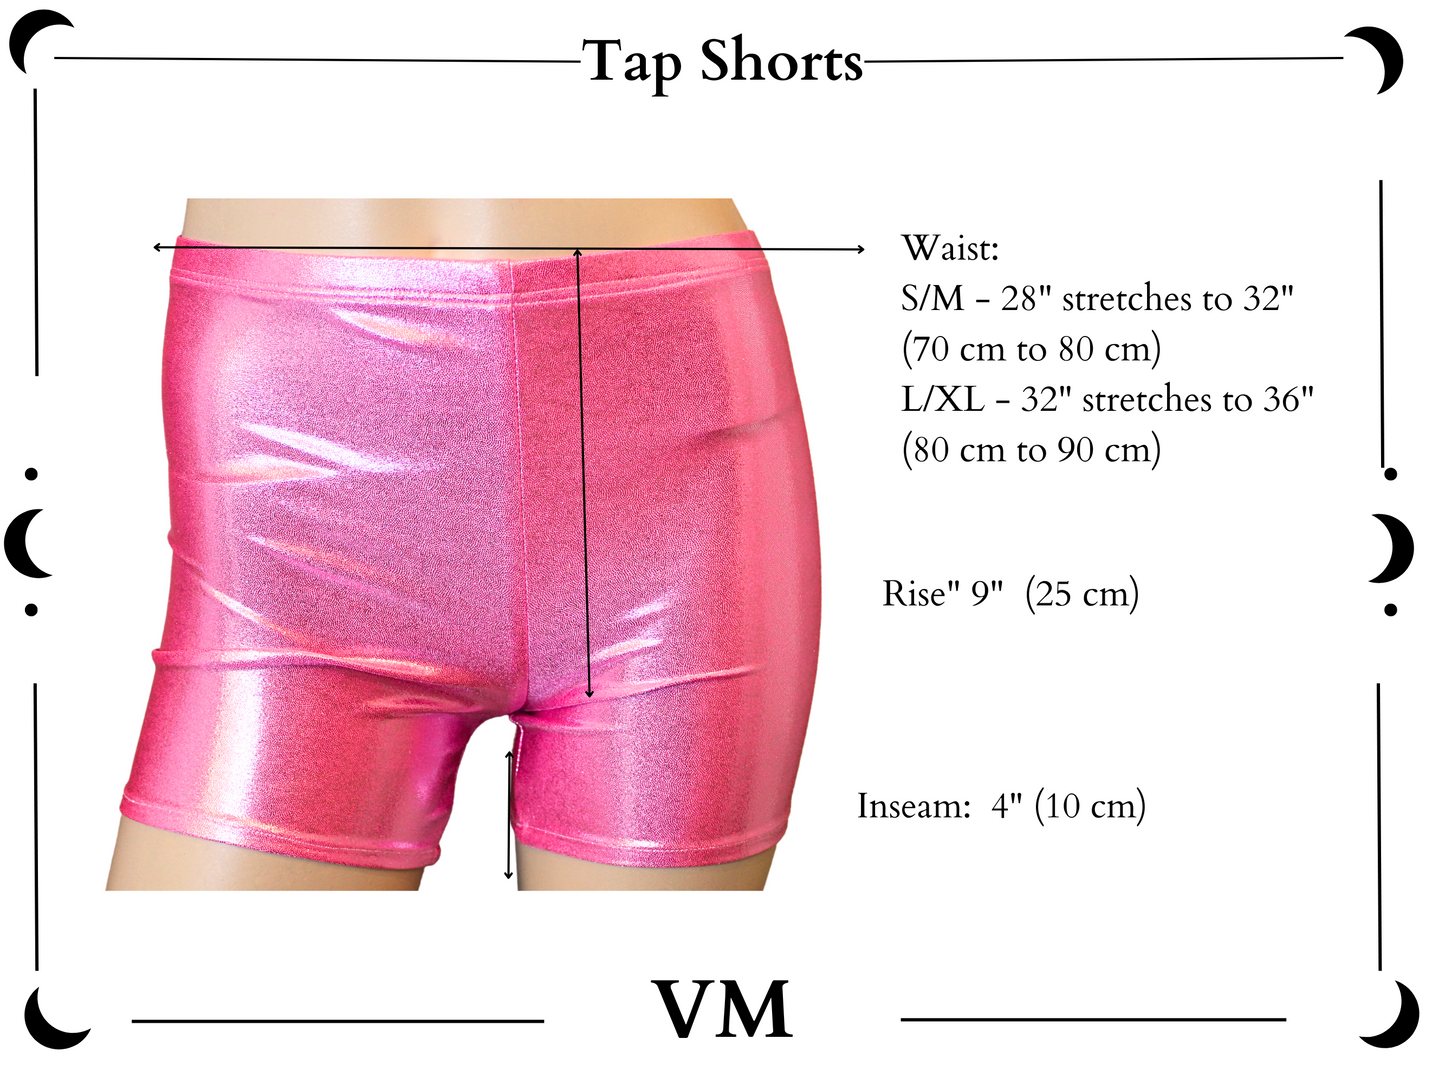 The VM Fishnet Tap Shorts